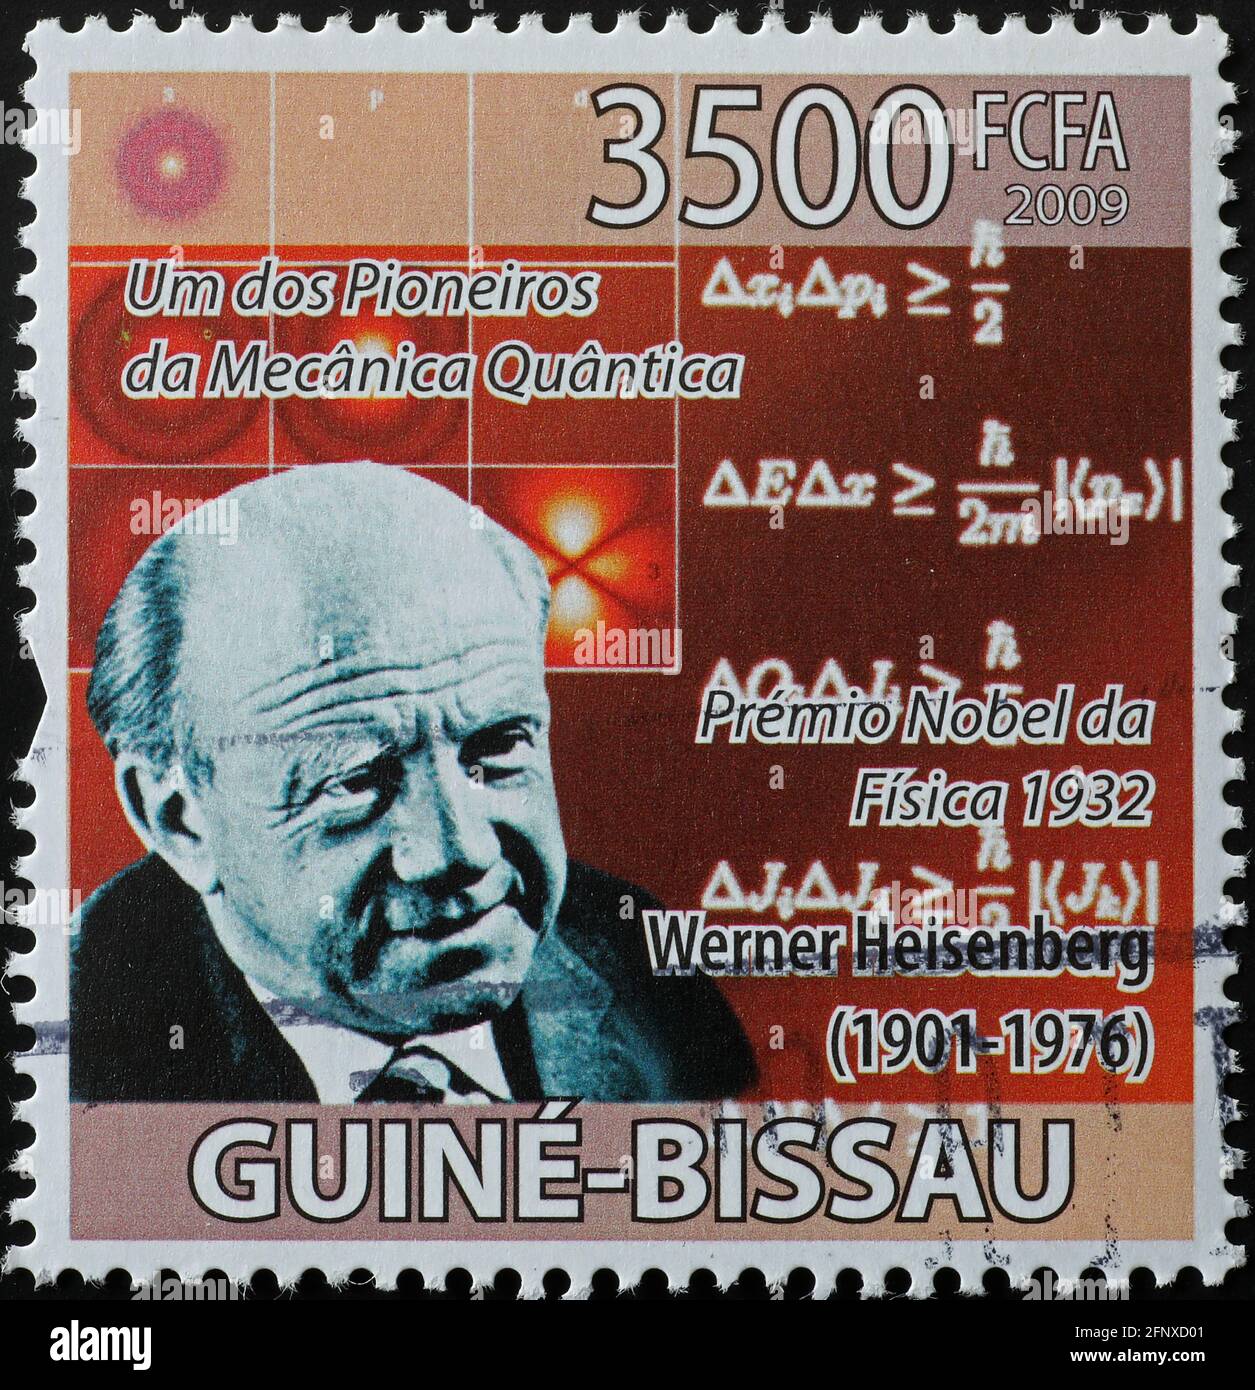 Werner Heisenberg portrait on postage stamp Stock Photo